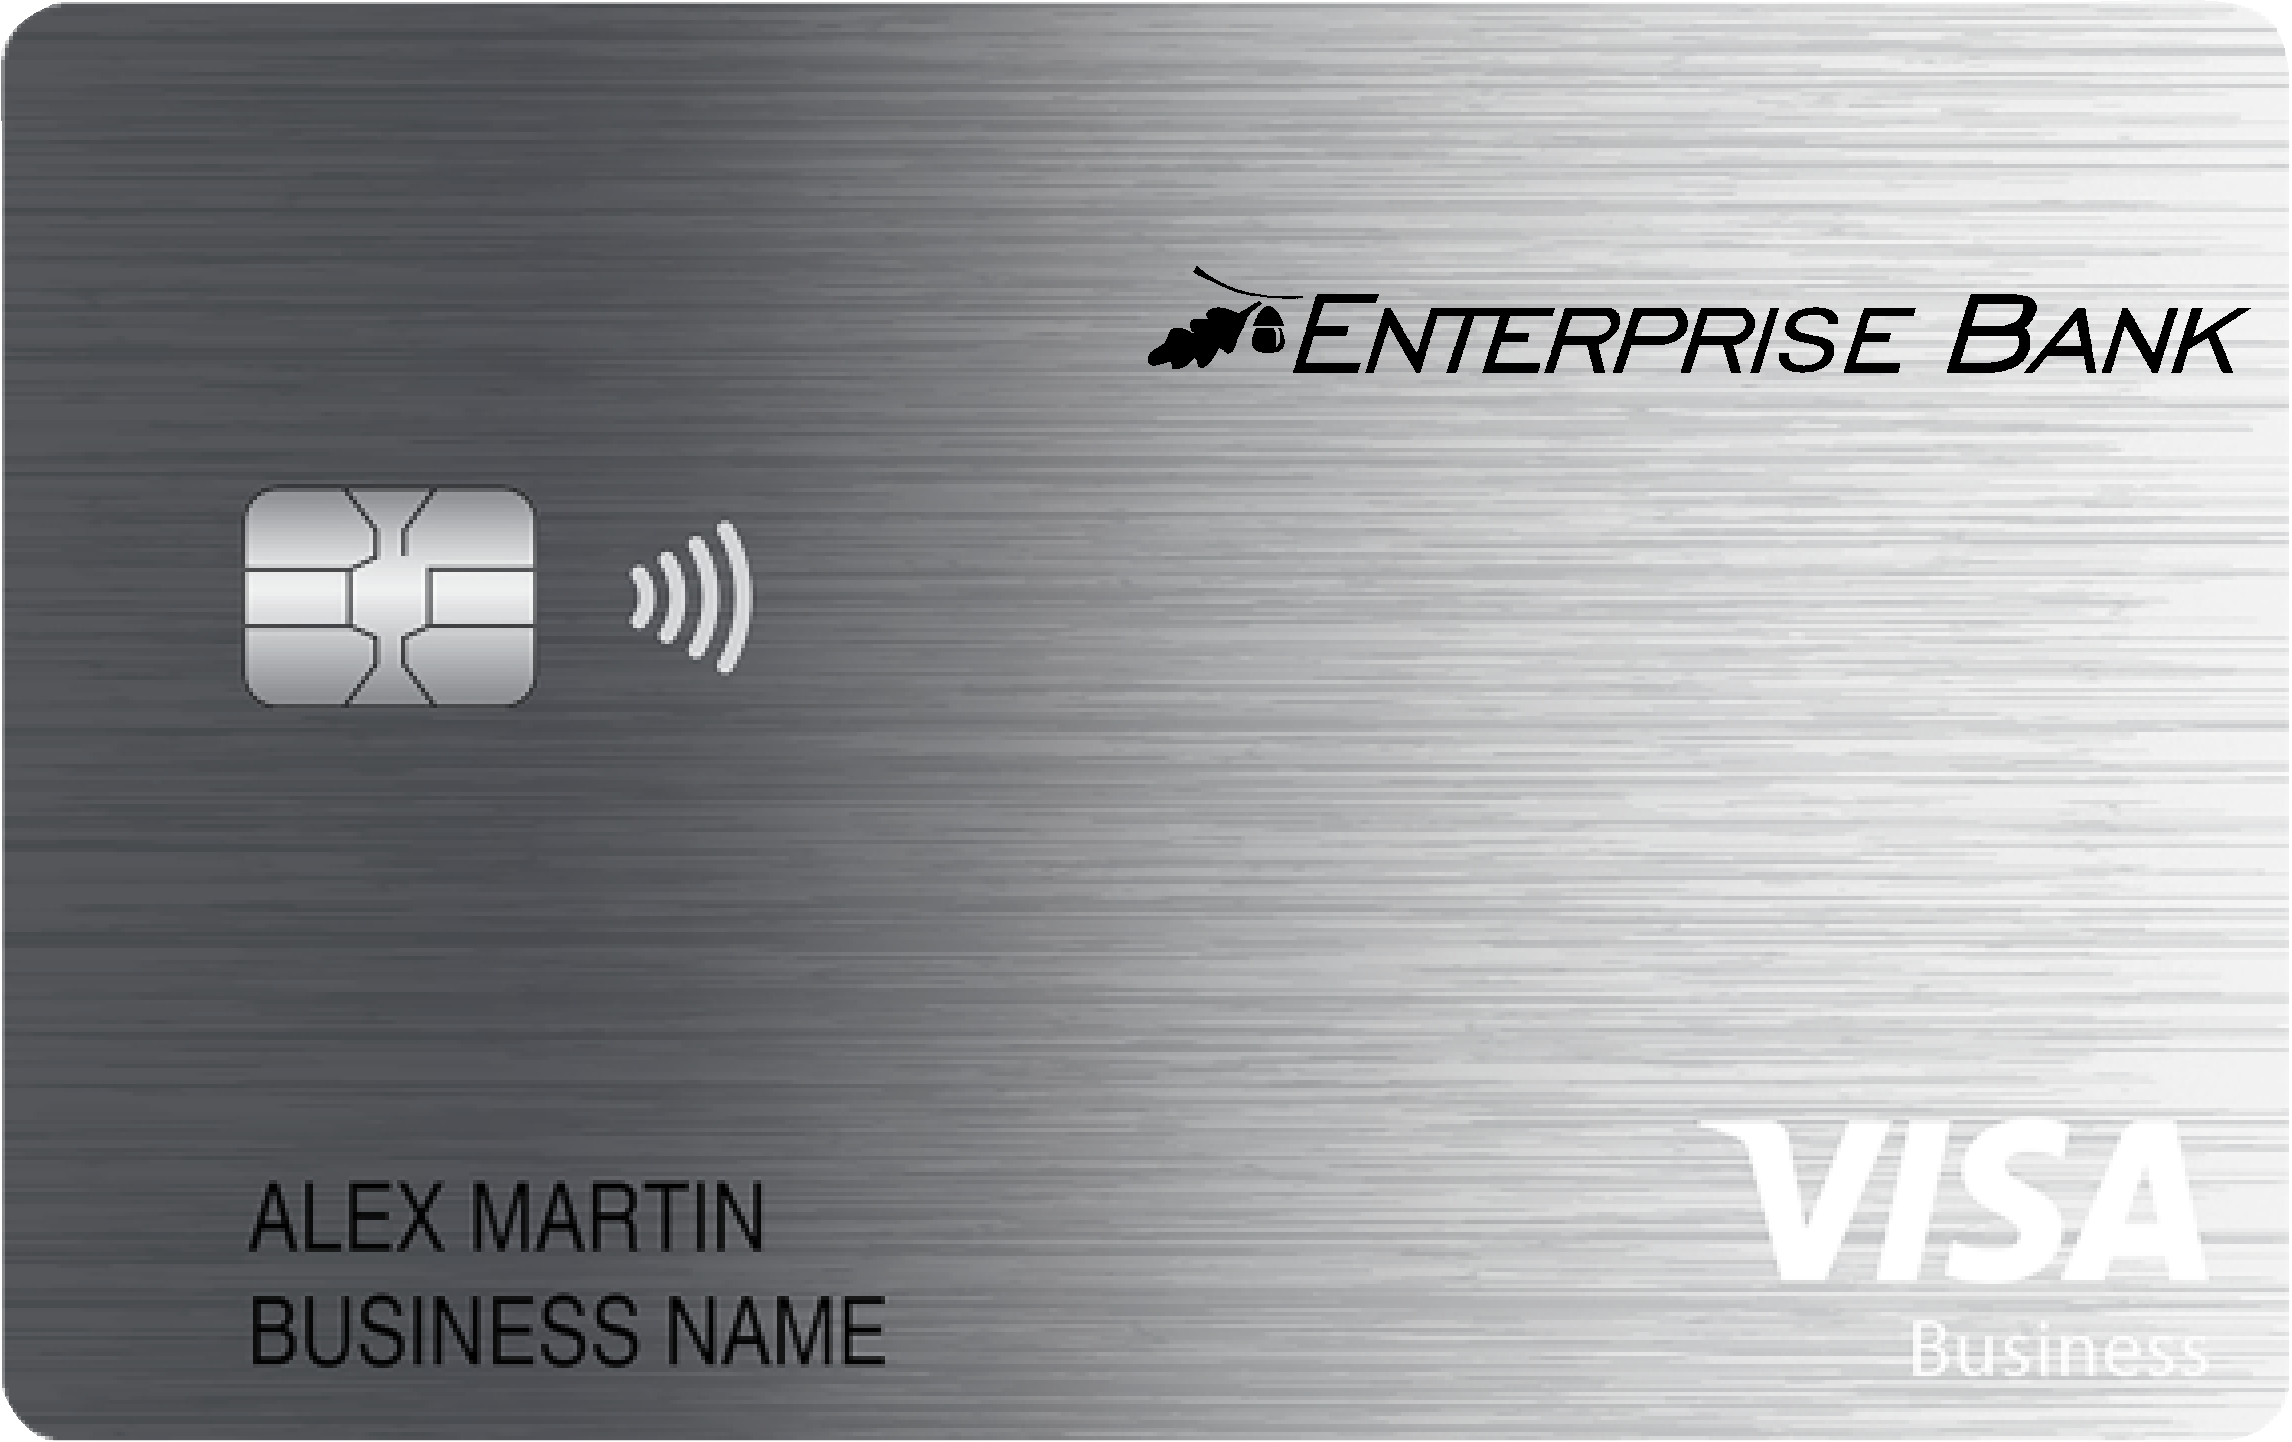 Enterprise Bank Business Cash Preferred  Card